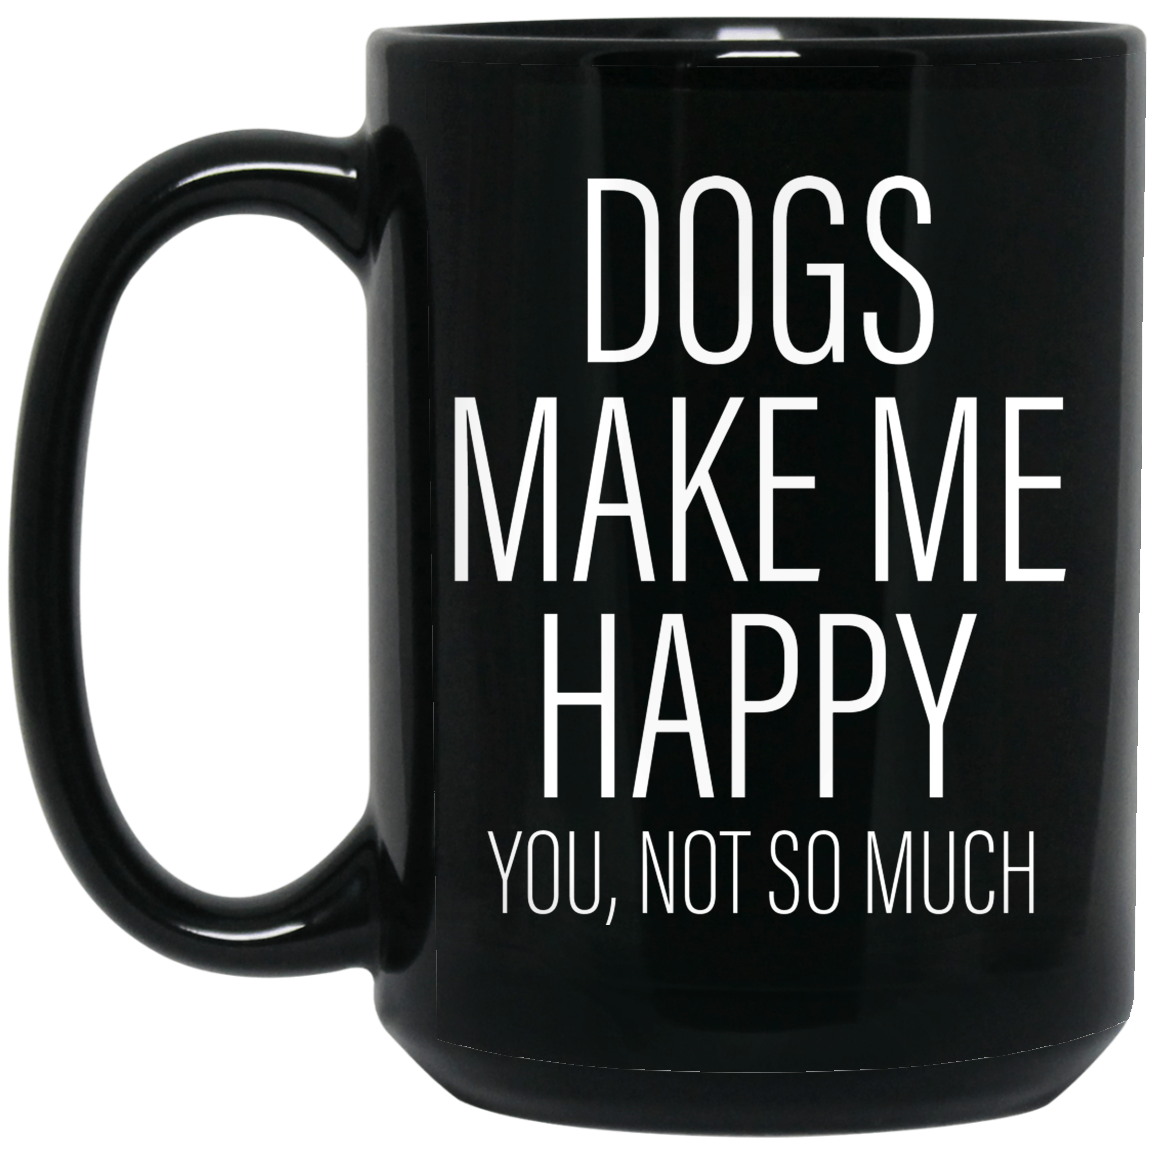 Dogs Make me Happy - Black Mugs